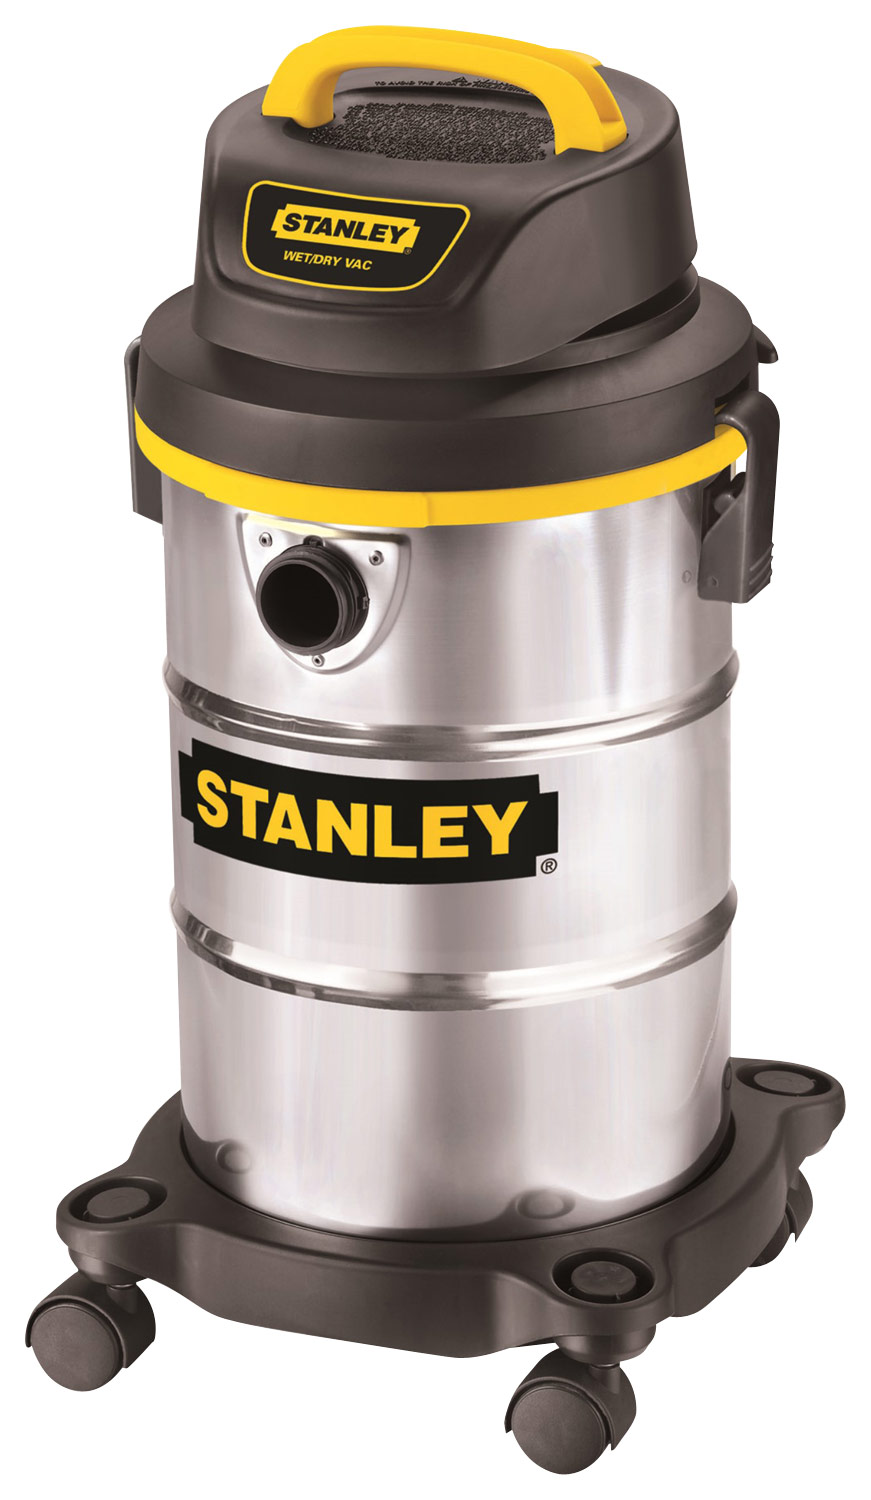 Stanley 5 Gallon, 4.5 HP Stainless Steel Wet/Dry Vacuum - Sam's Club